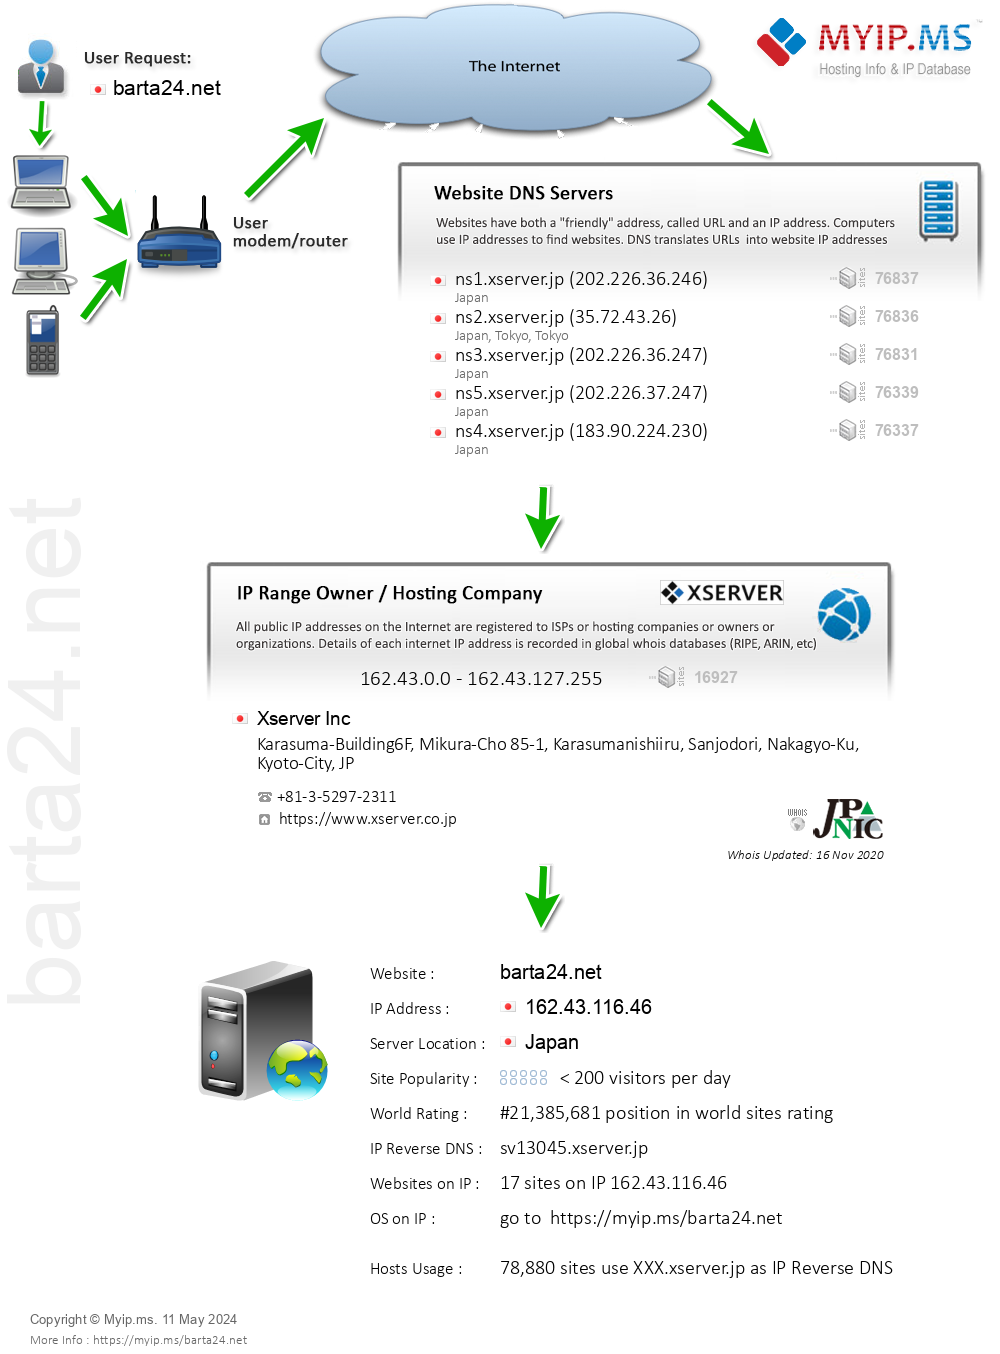 Barta24.net - Website Hosting Visual IP Diagram